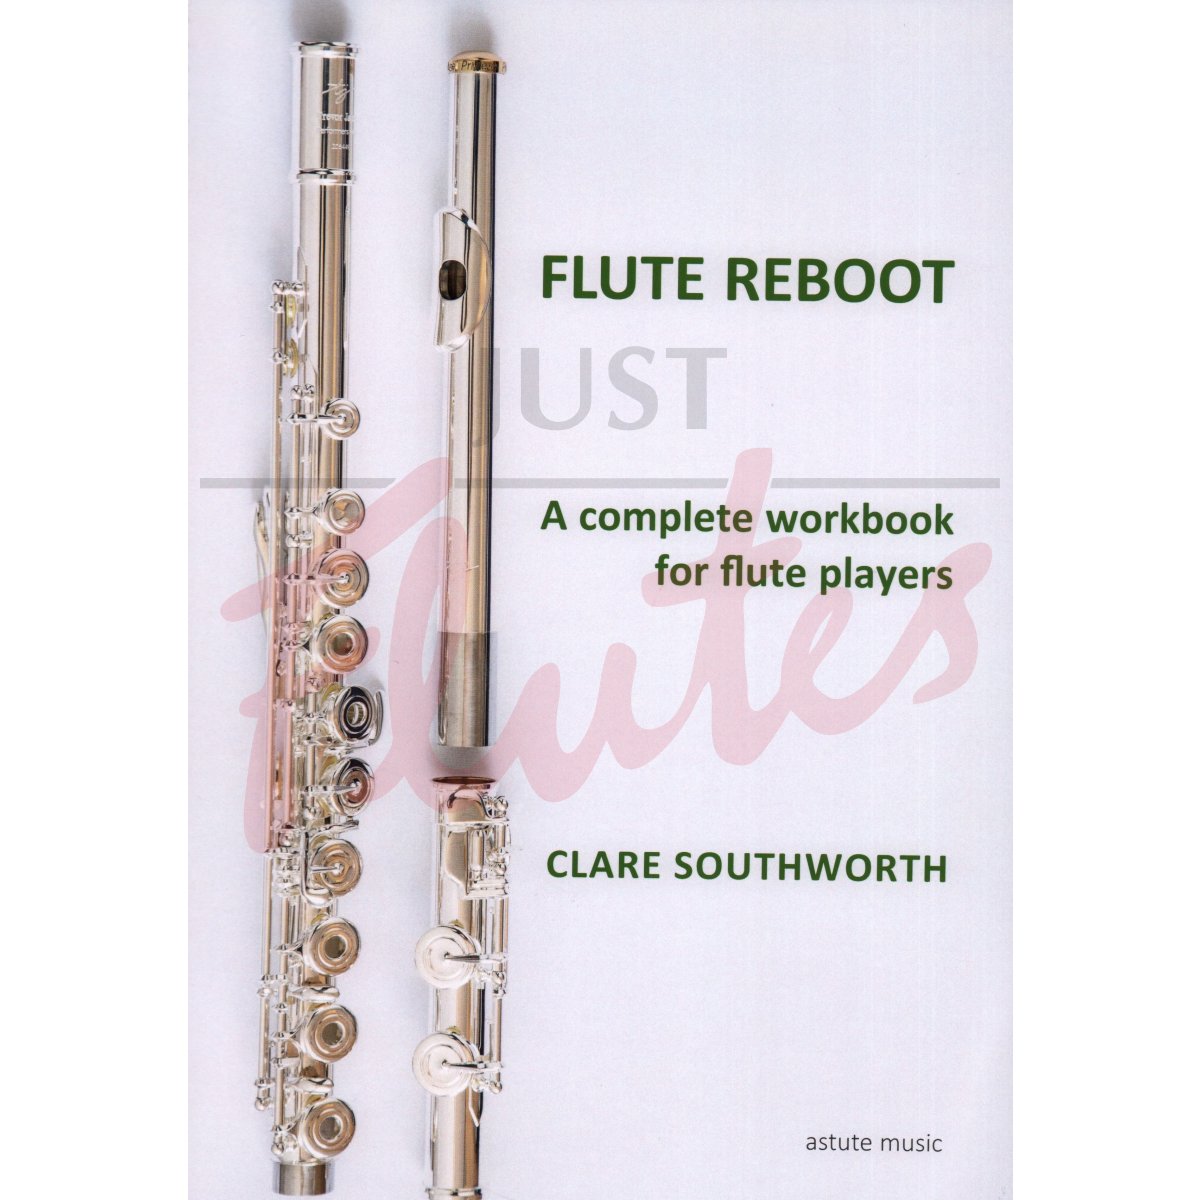 Flute Reboot